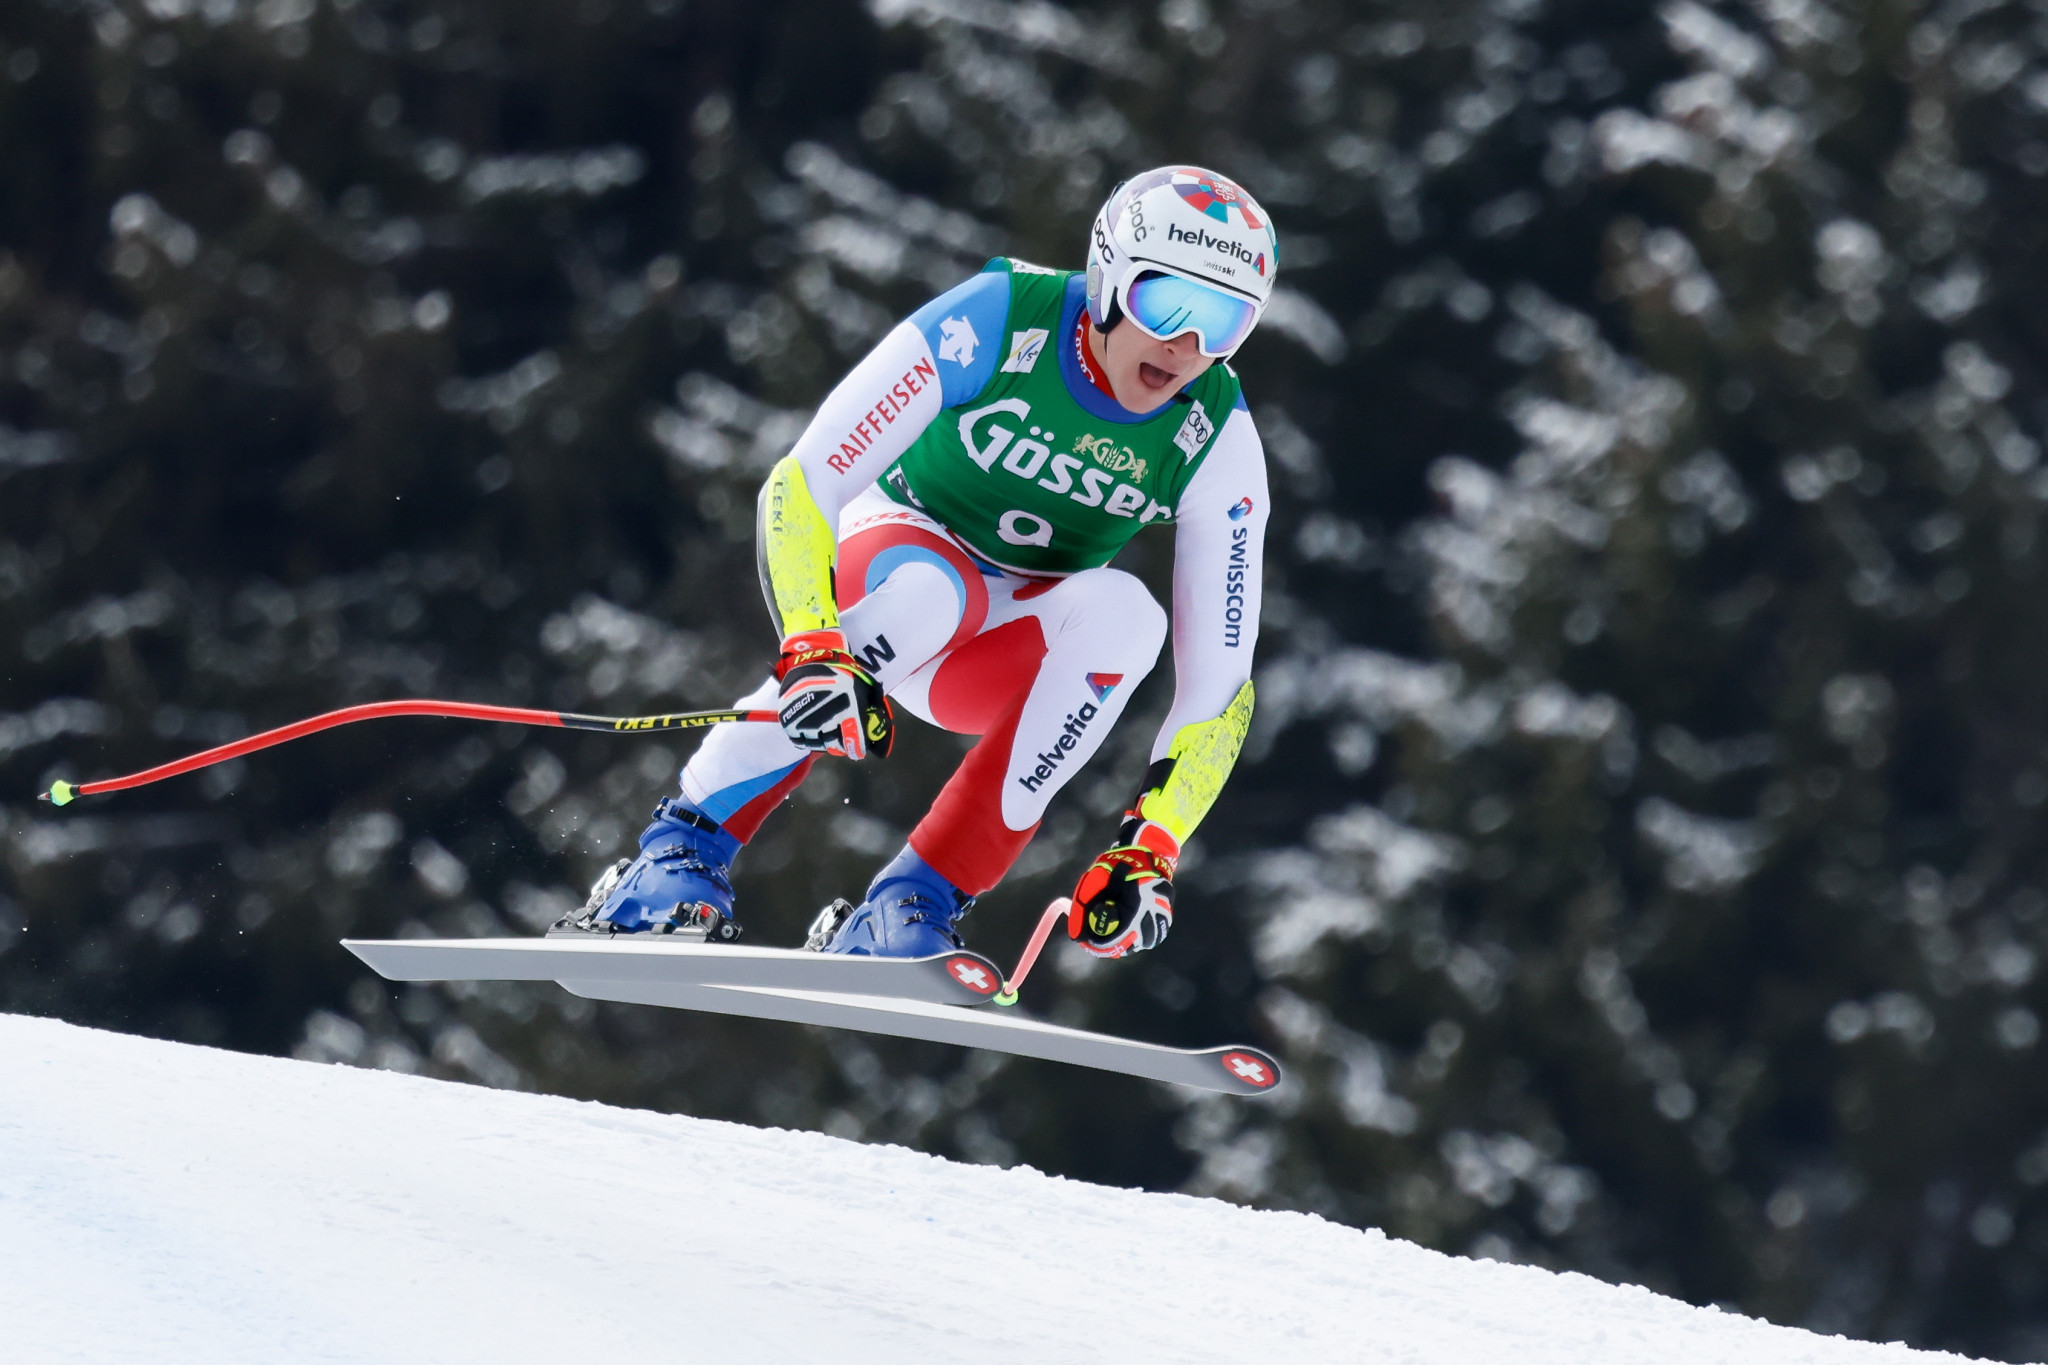 Odermatt to continue pursuit of Pinturault at penultimate FIS Alpine Ski World Cup stop